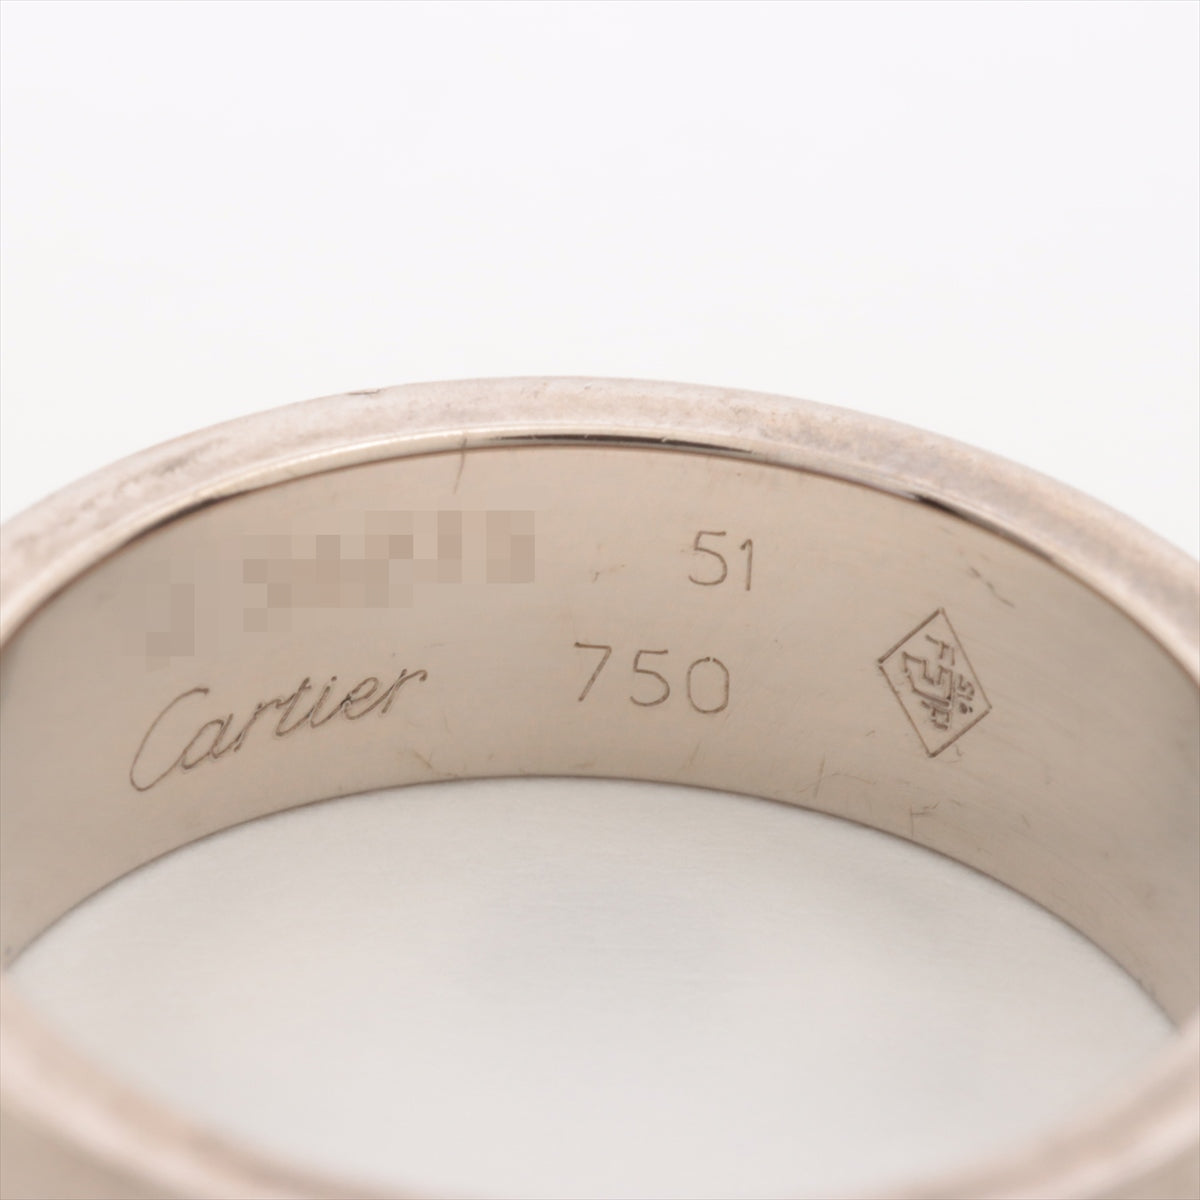 Cartier  Ring 750 (WG) 7.0g 51